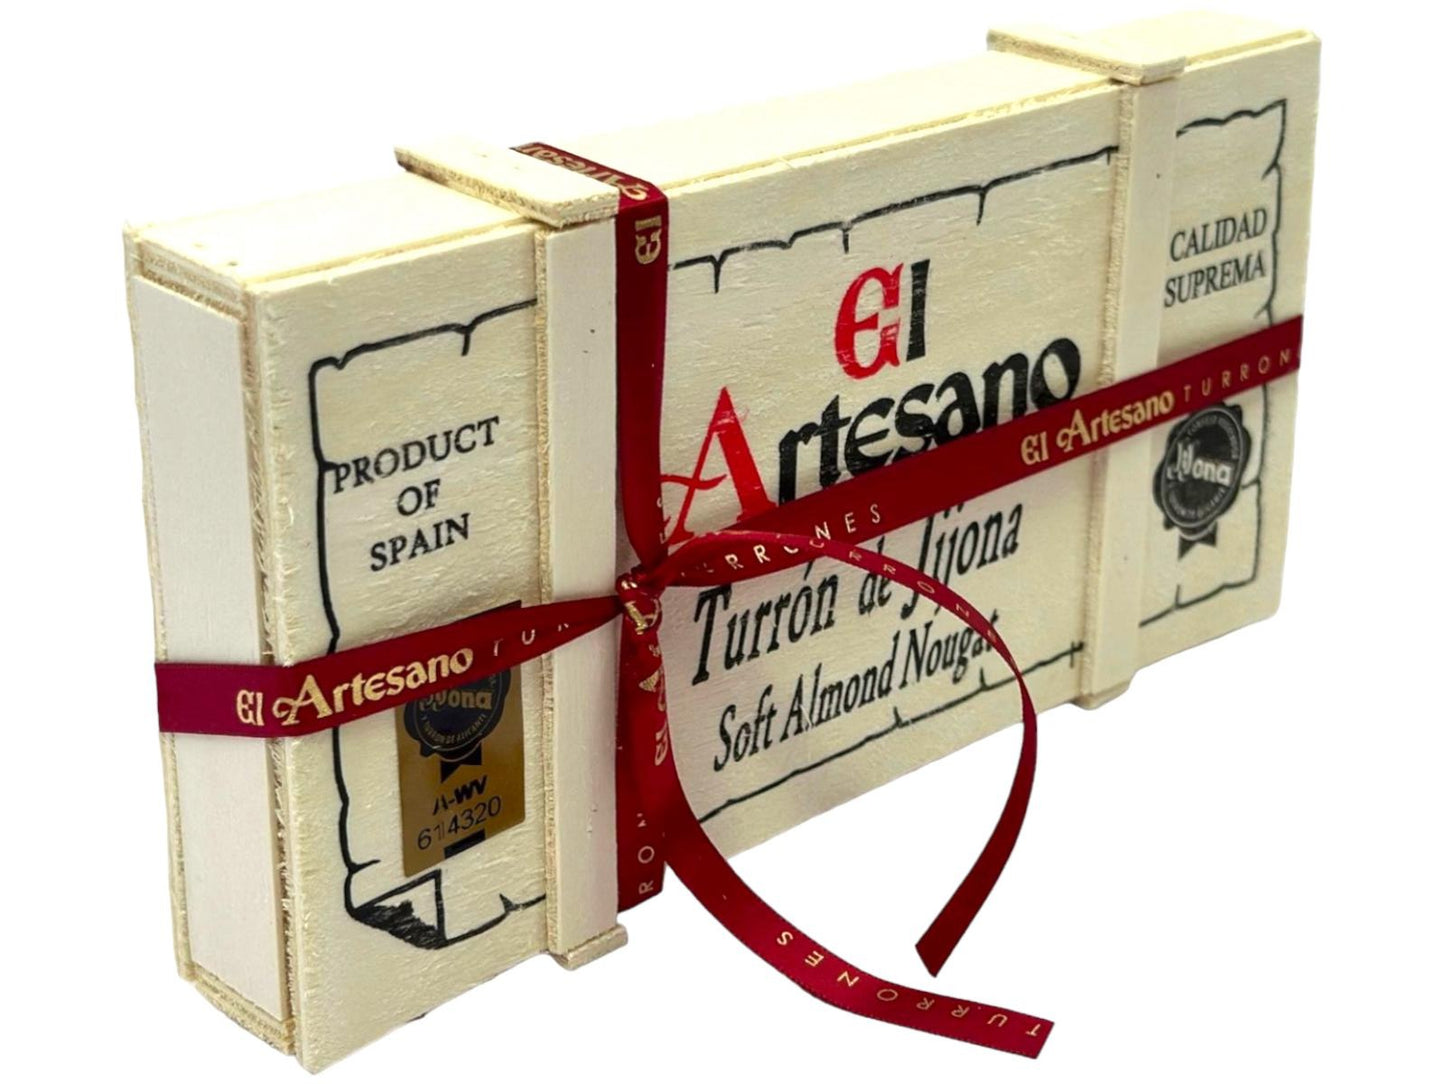 El Artesano Spanish Almond Nougat in Wooden Gift Box Turron de Jijona 200g